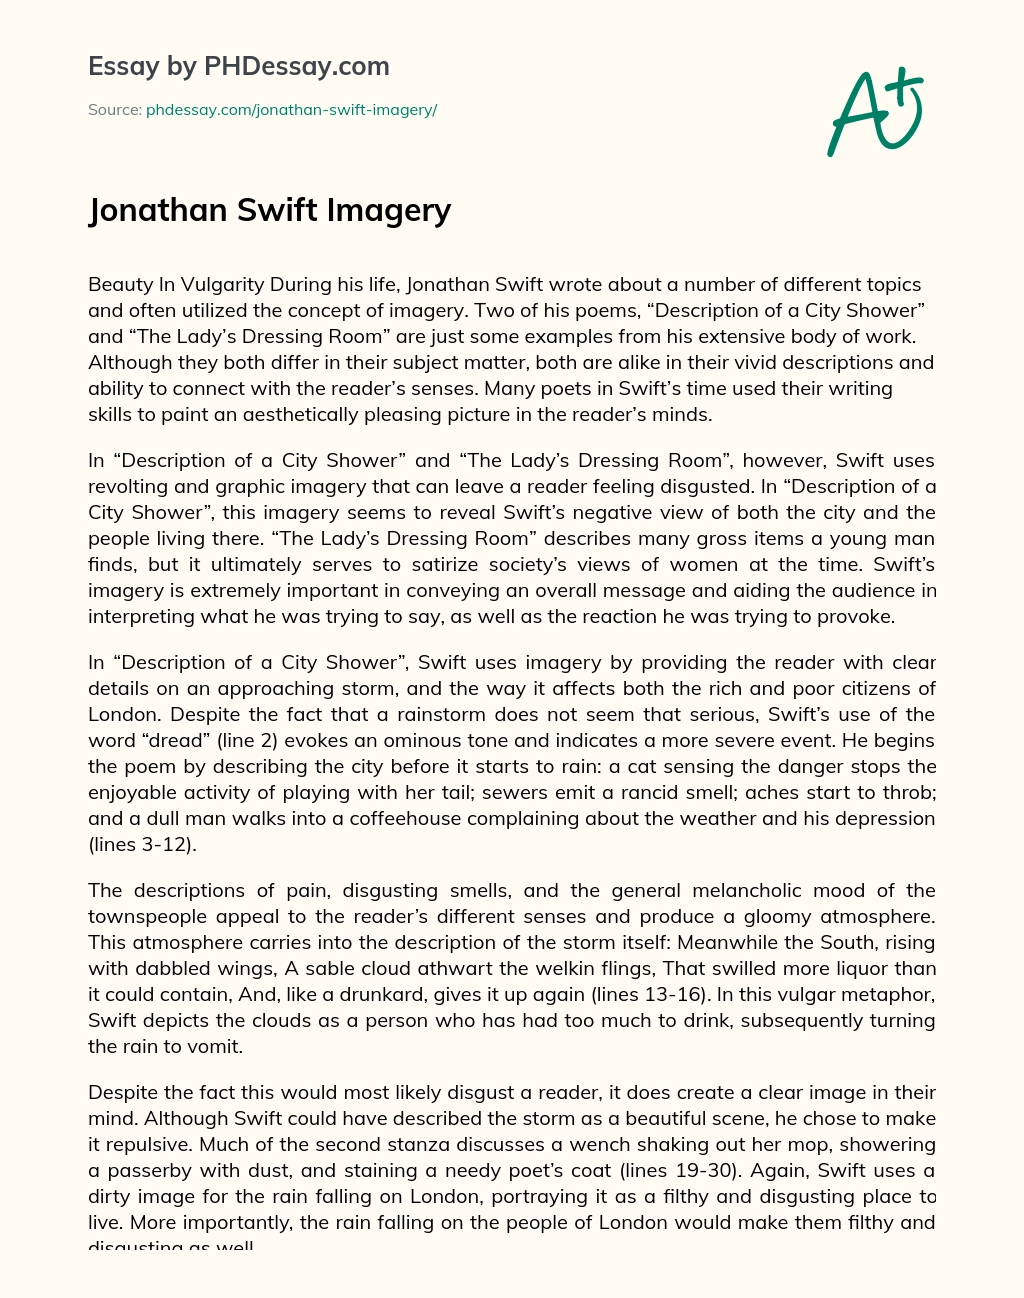 Jonathan Swift Imagery essay